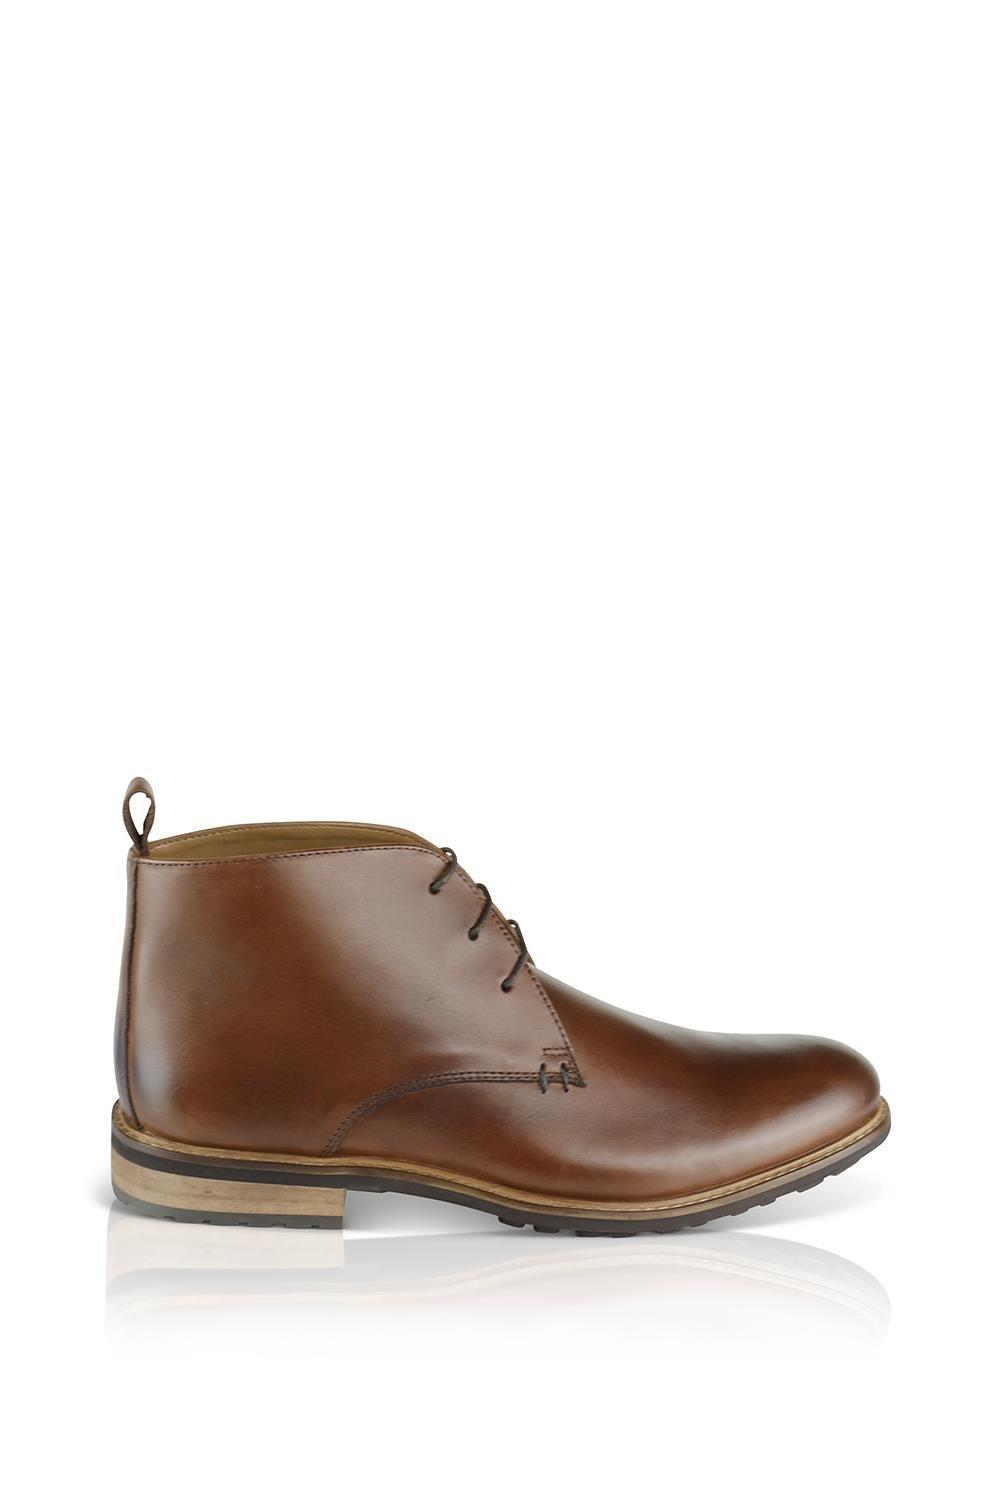 Кожаные ботинки чукка Ludgate Silver Street London, коричневый ботинки чукка размер eu43 черный